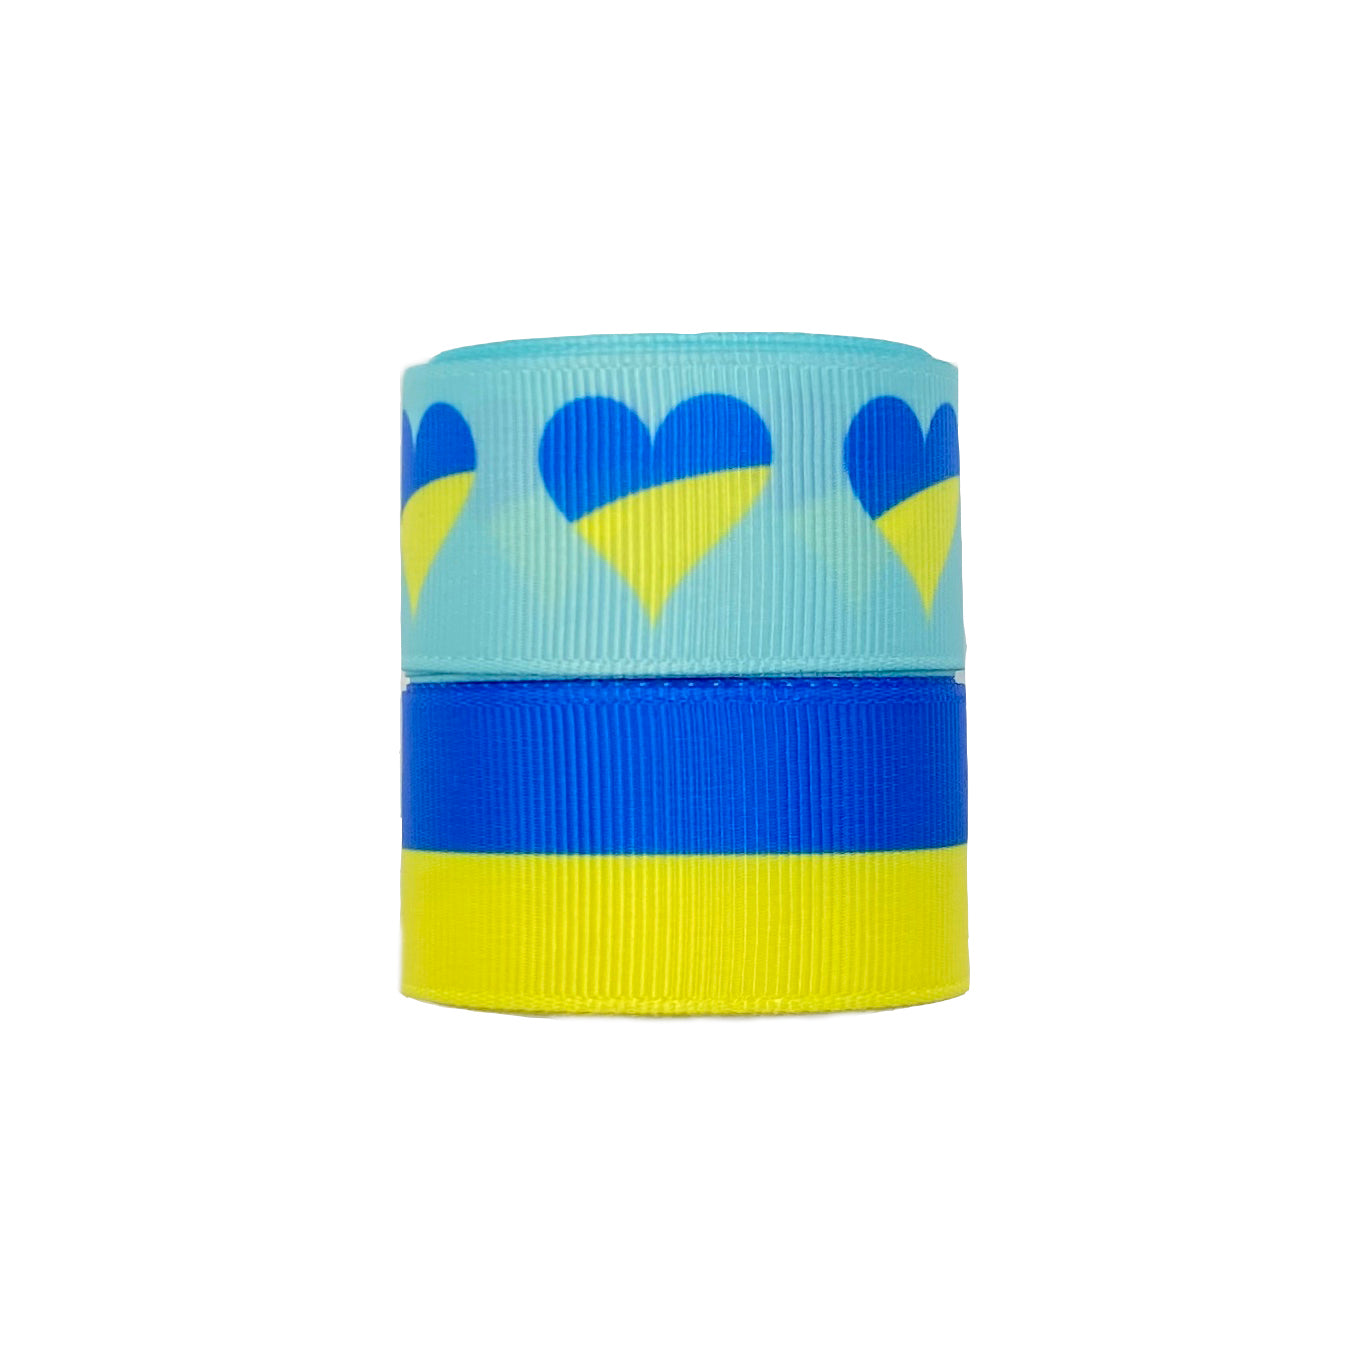 25mm Ukraine Flag Grosgrain Ribbon For Hair Bow Diy Crafts Sewing Accessories Bracelet Handmade Materials